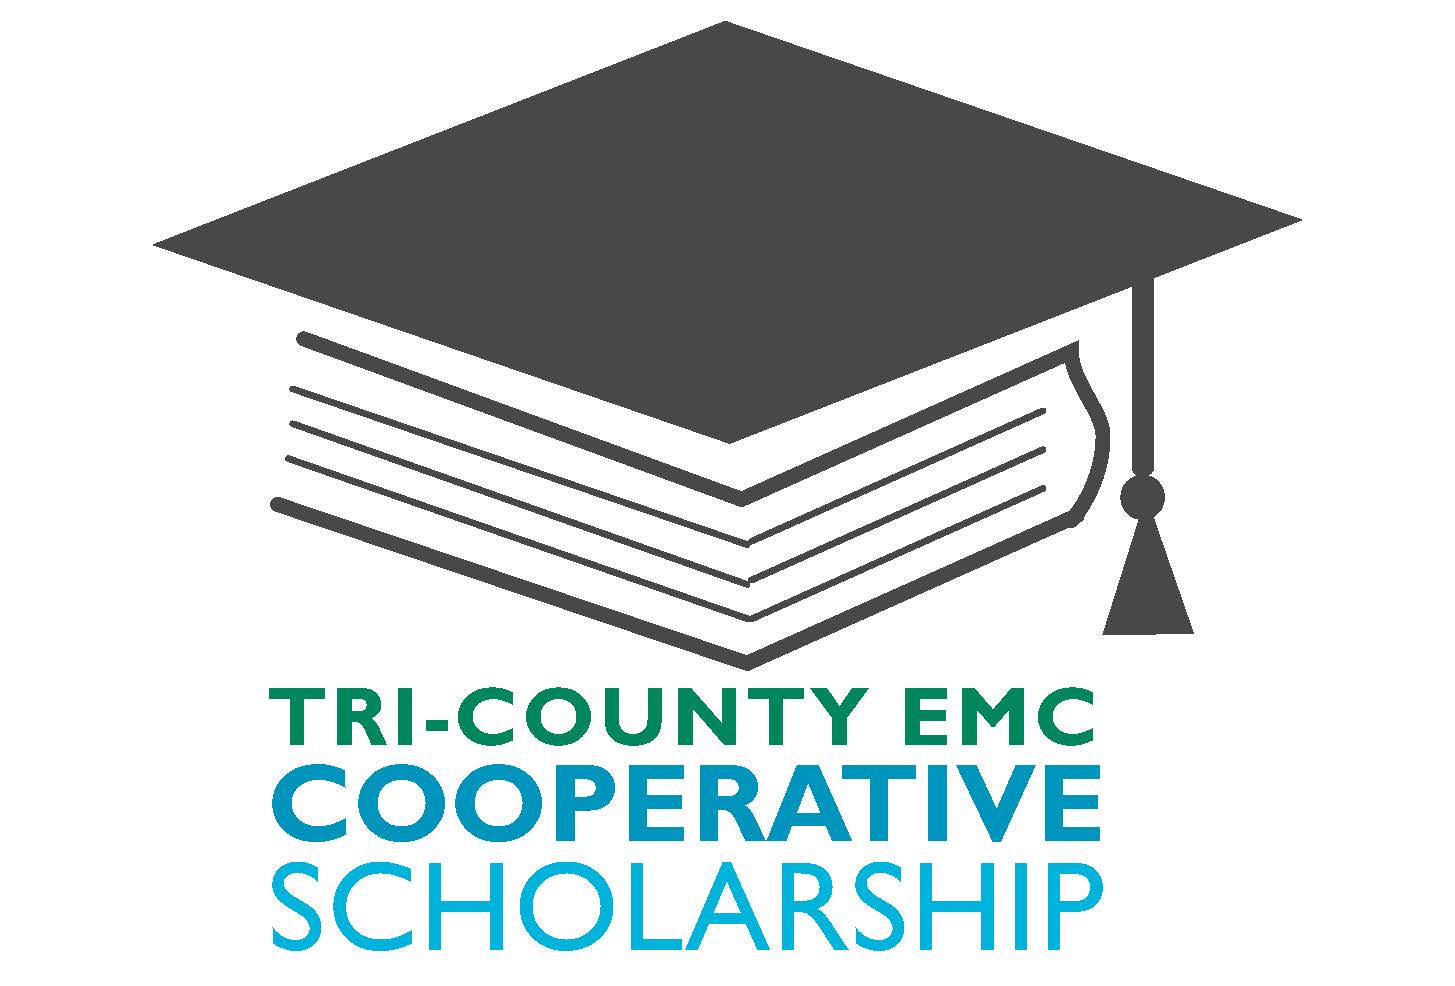 Tri-County EMC